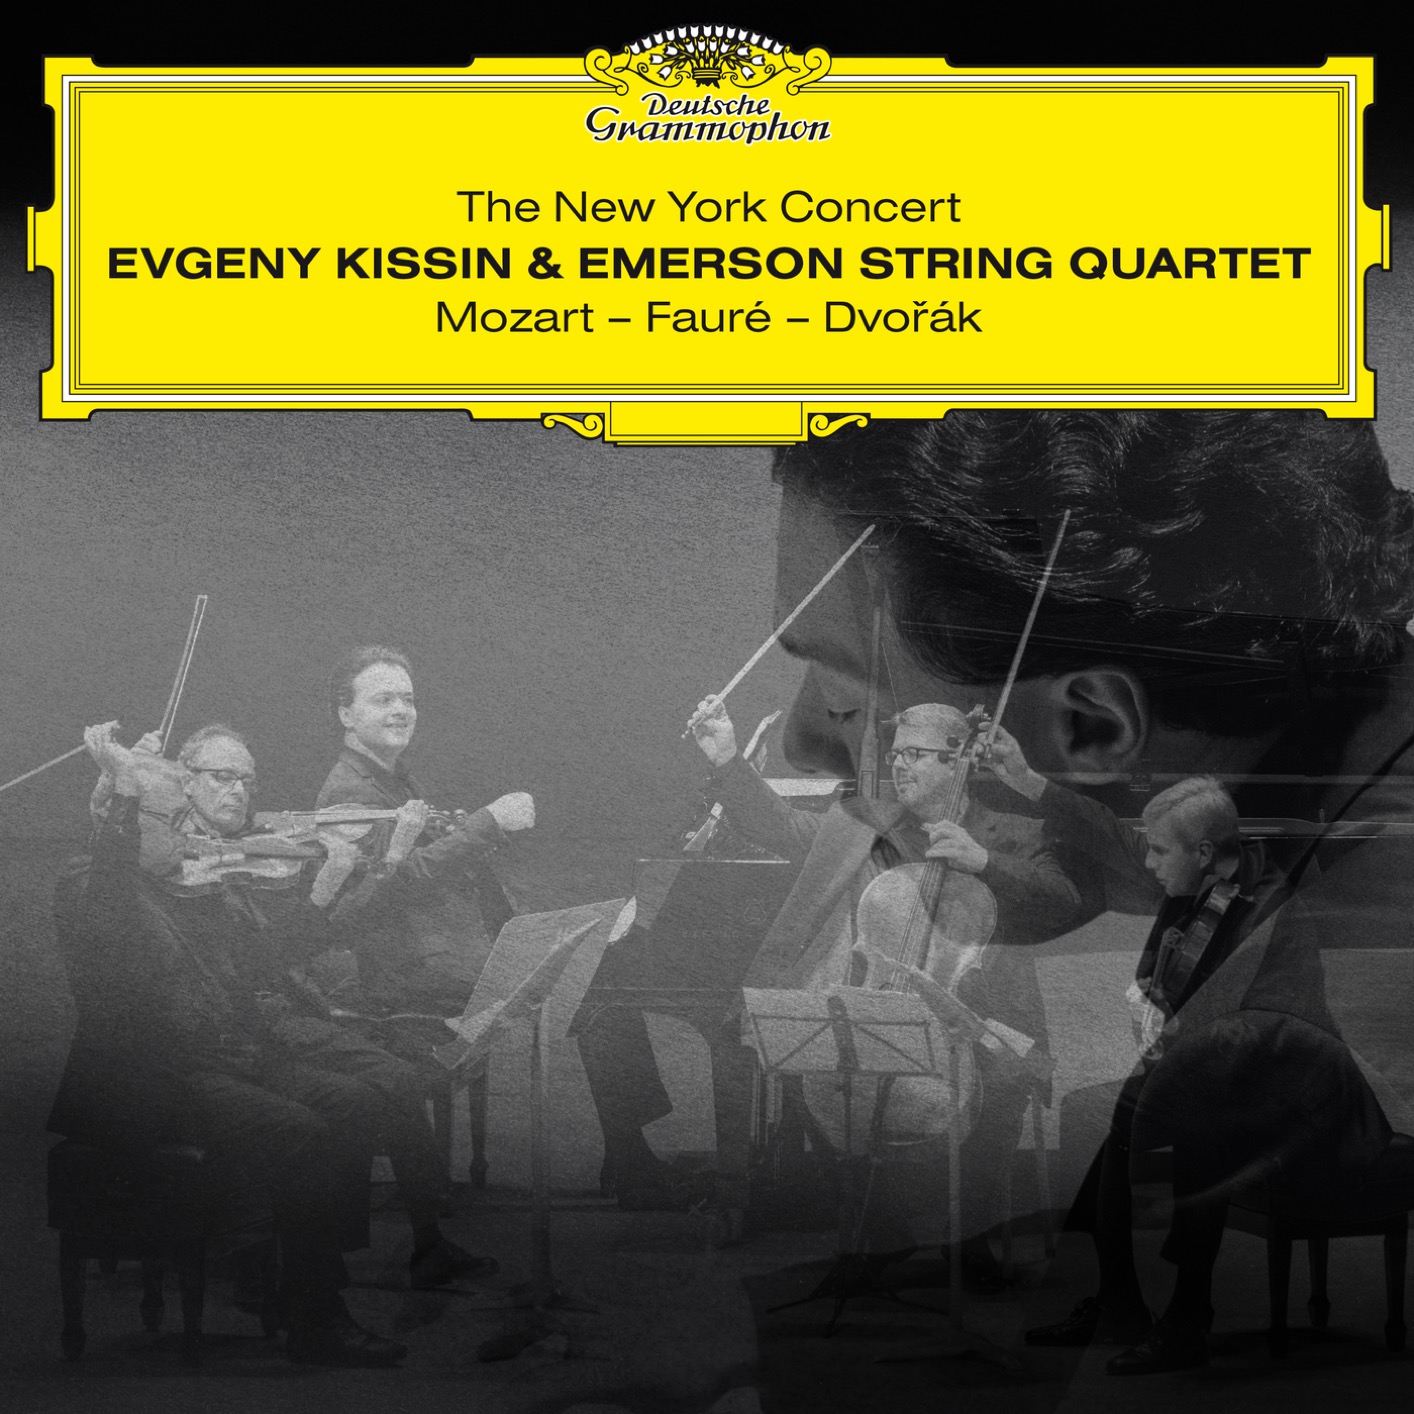 Evgeny Kissin & Emerson String Quartet – The New York Concert (2019) [FLAC 24bit/96kHz]